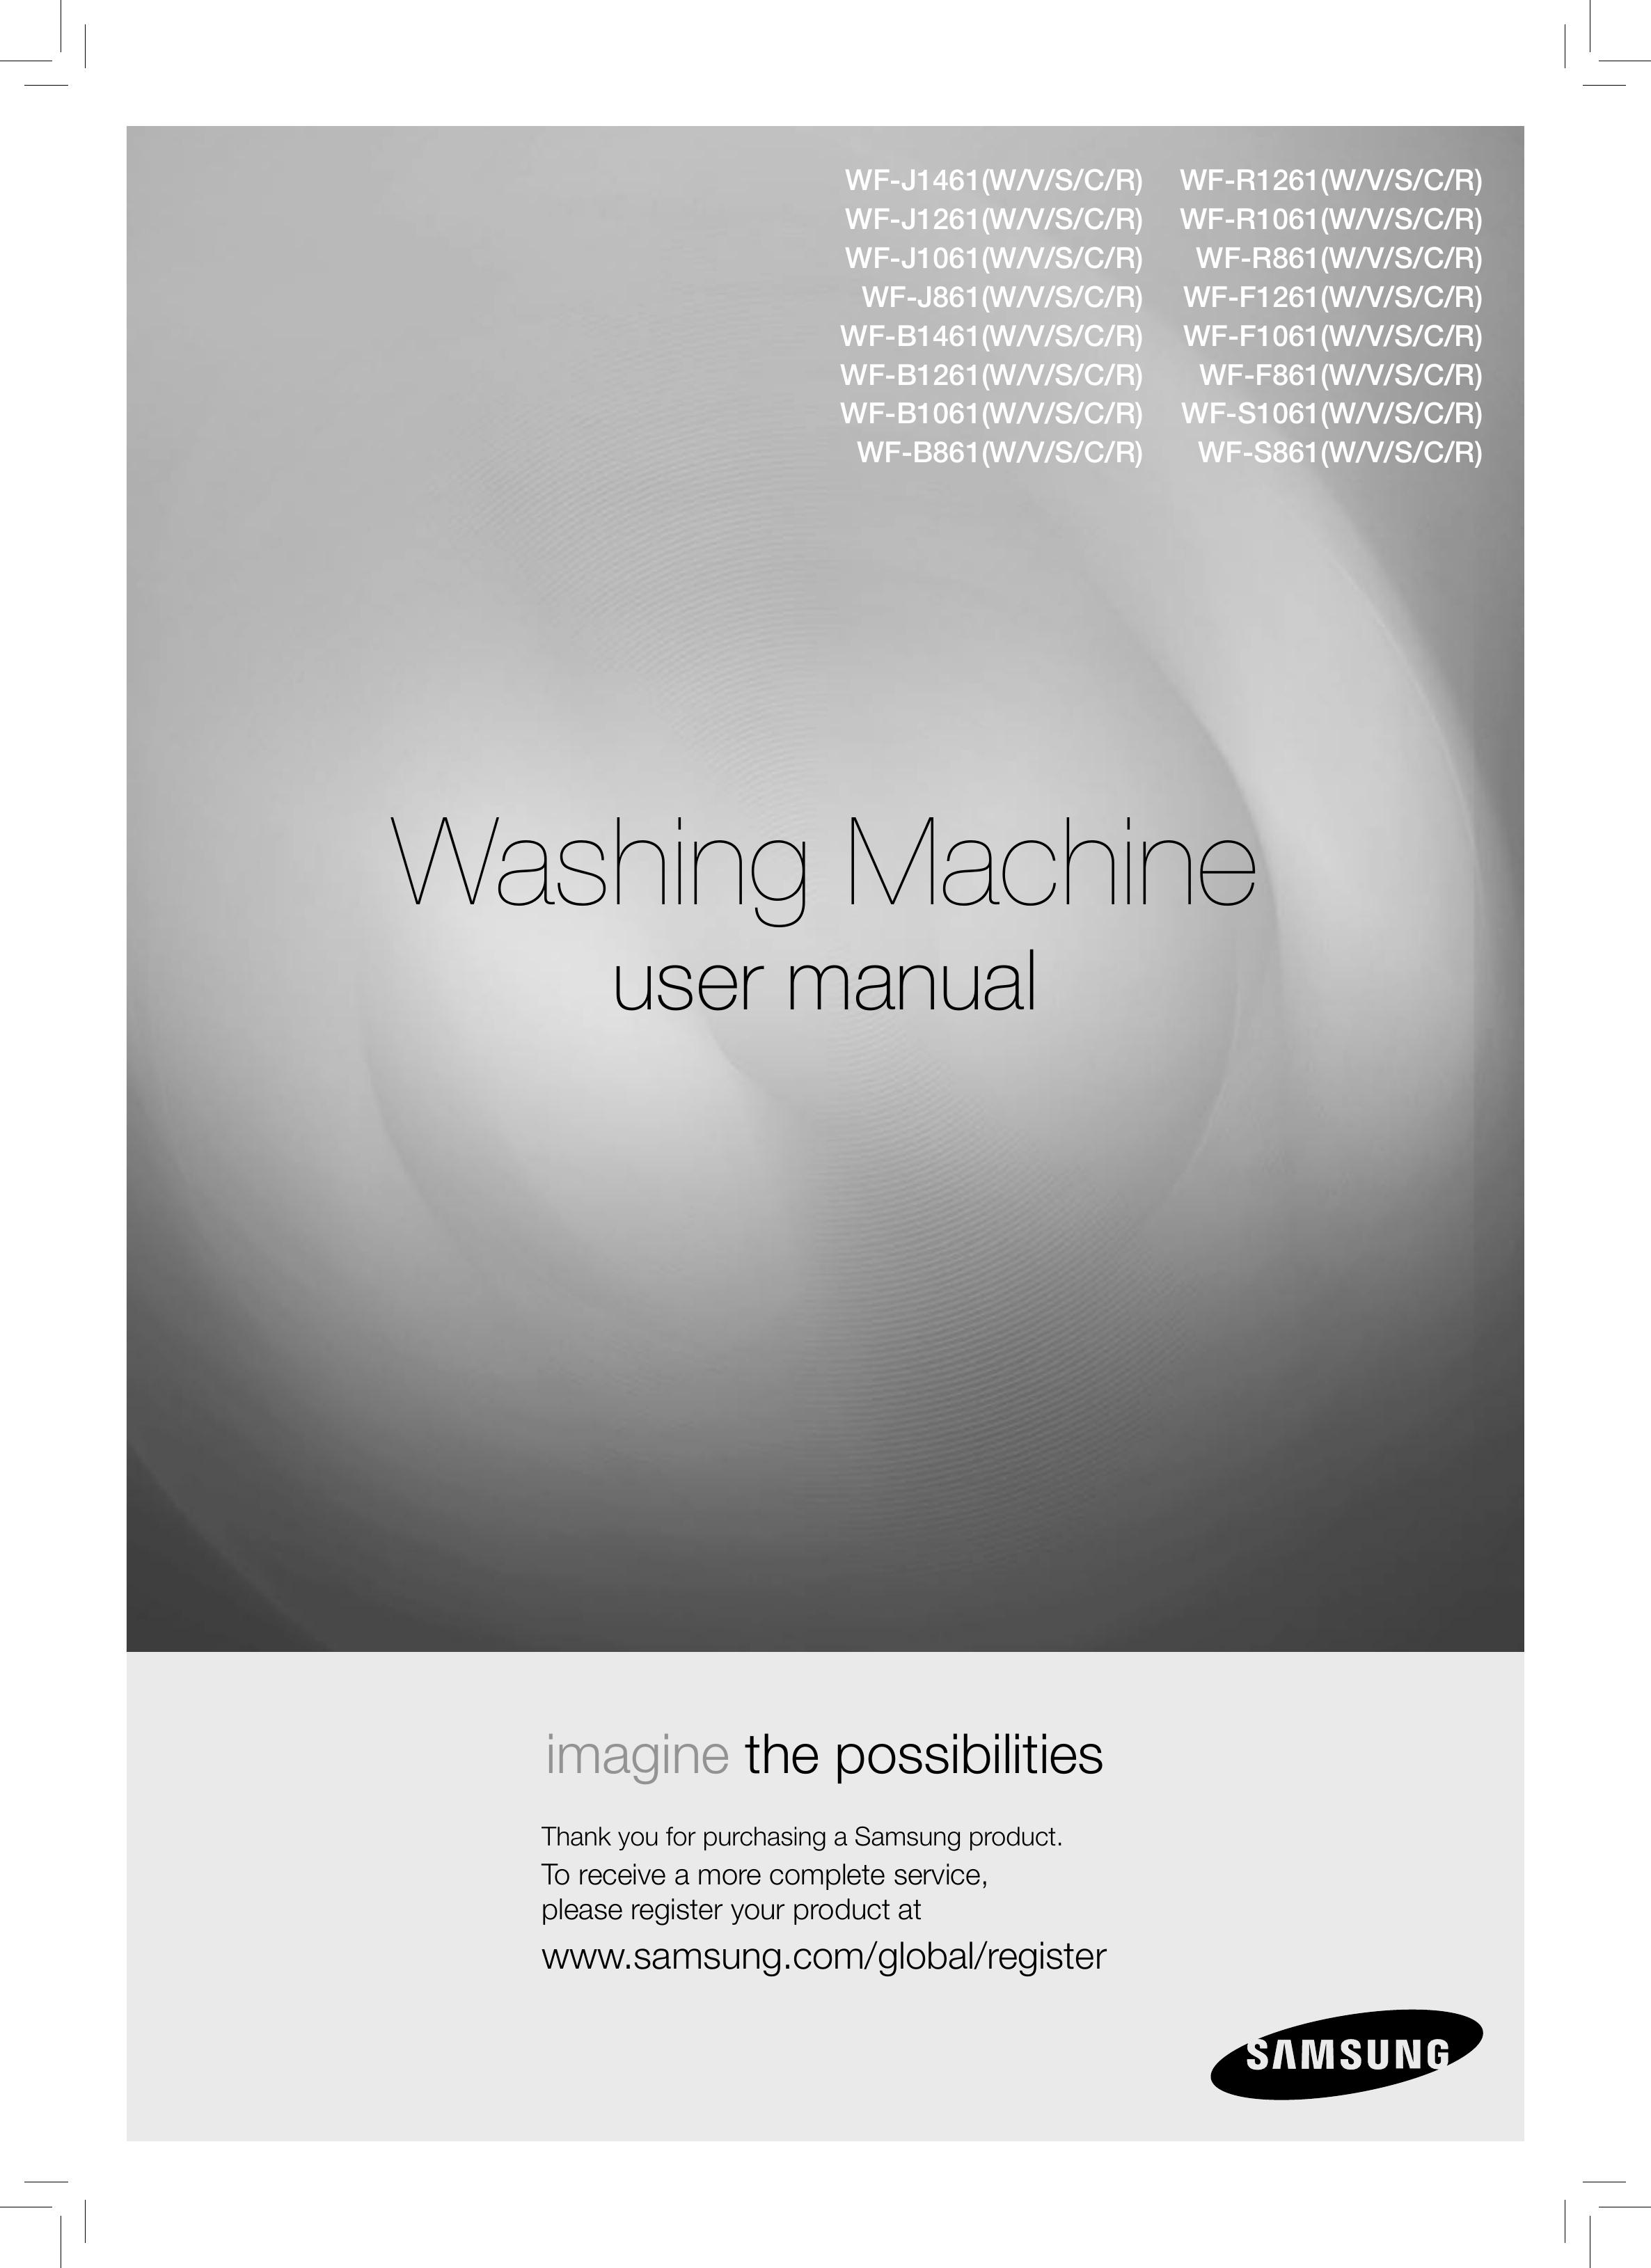 Samsung WF-B1061 Washer/Dryer User Manual